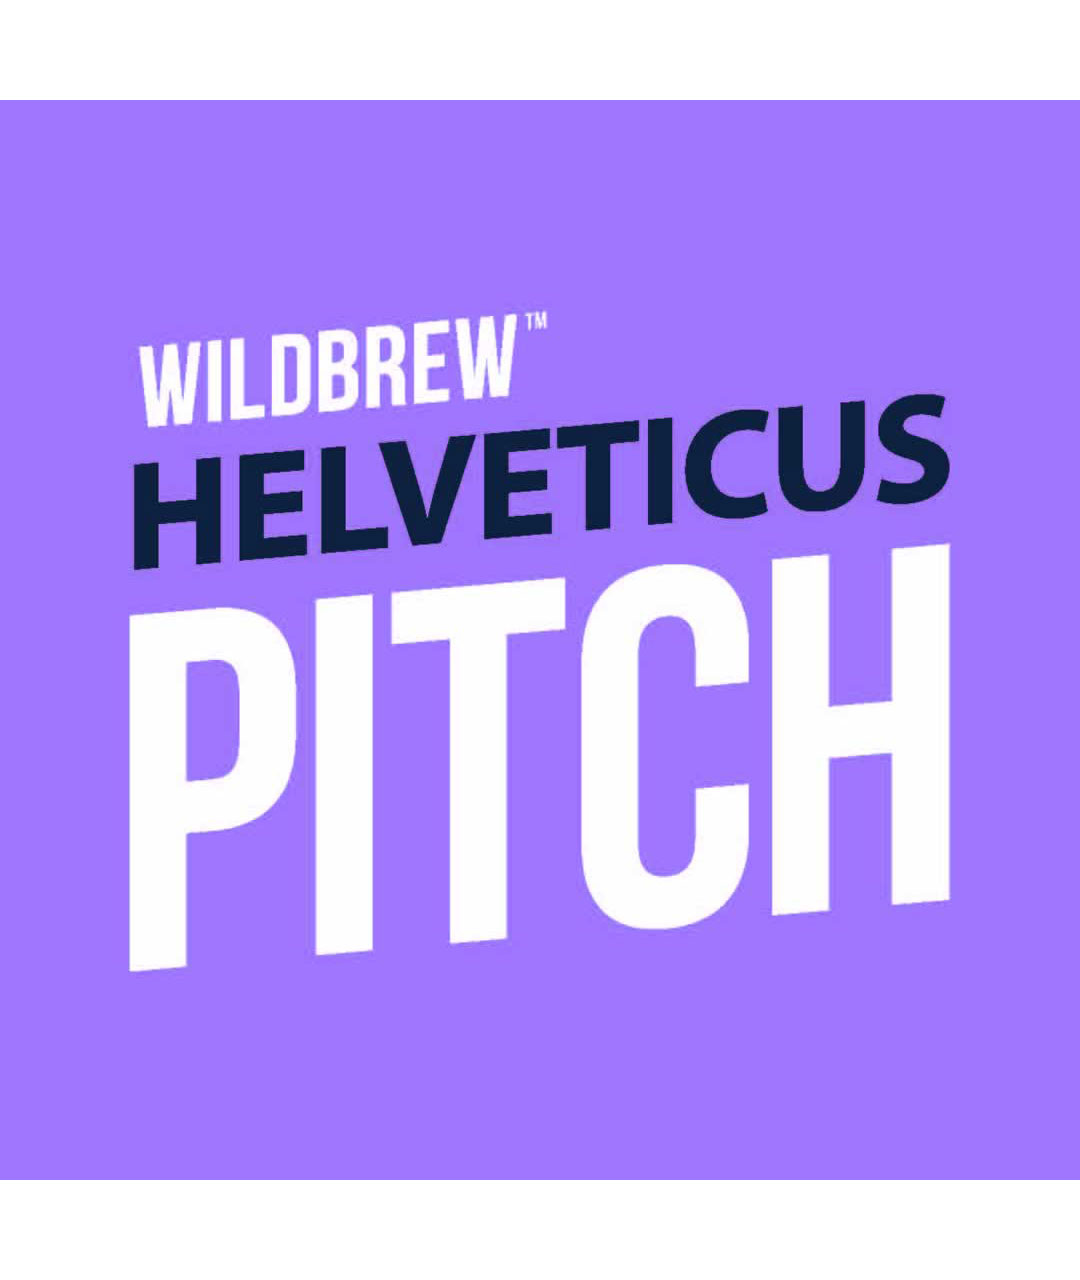 Wildbrew Helveticus Pitch